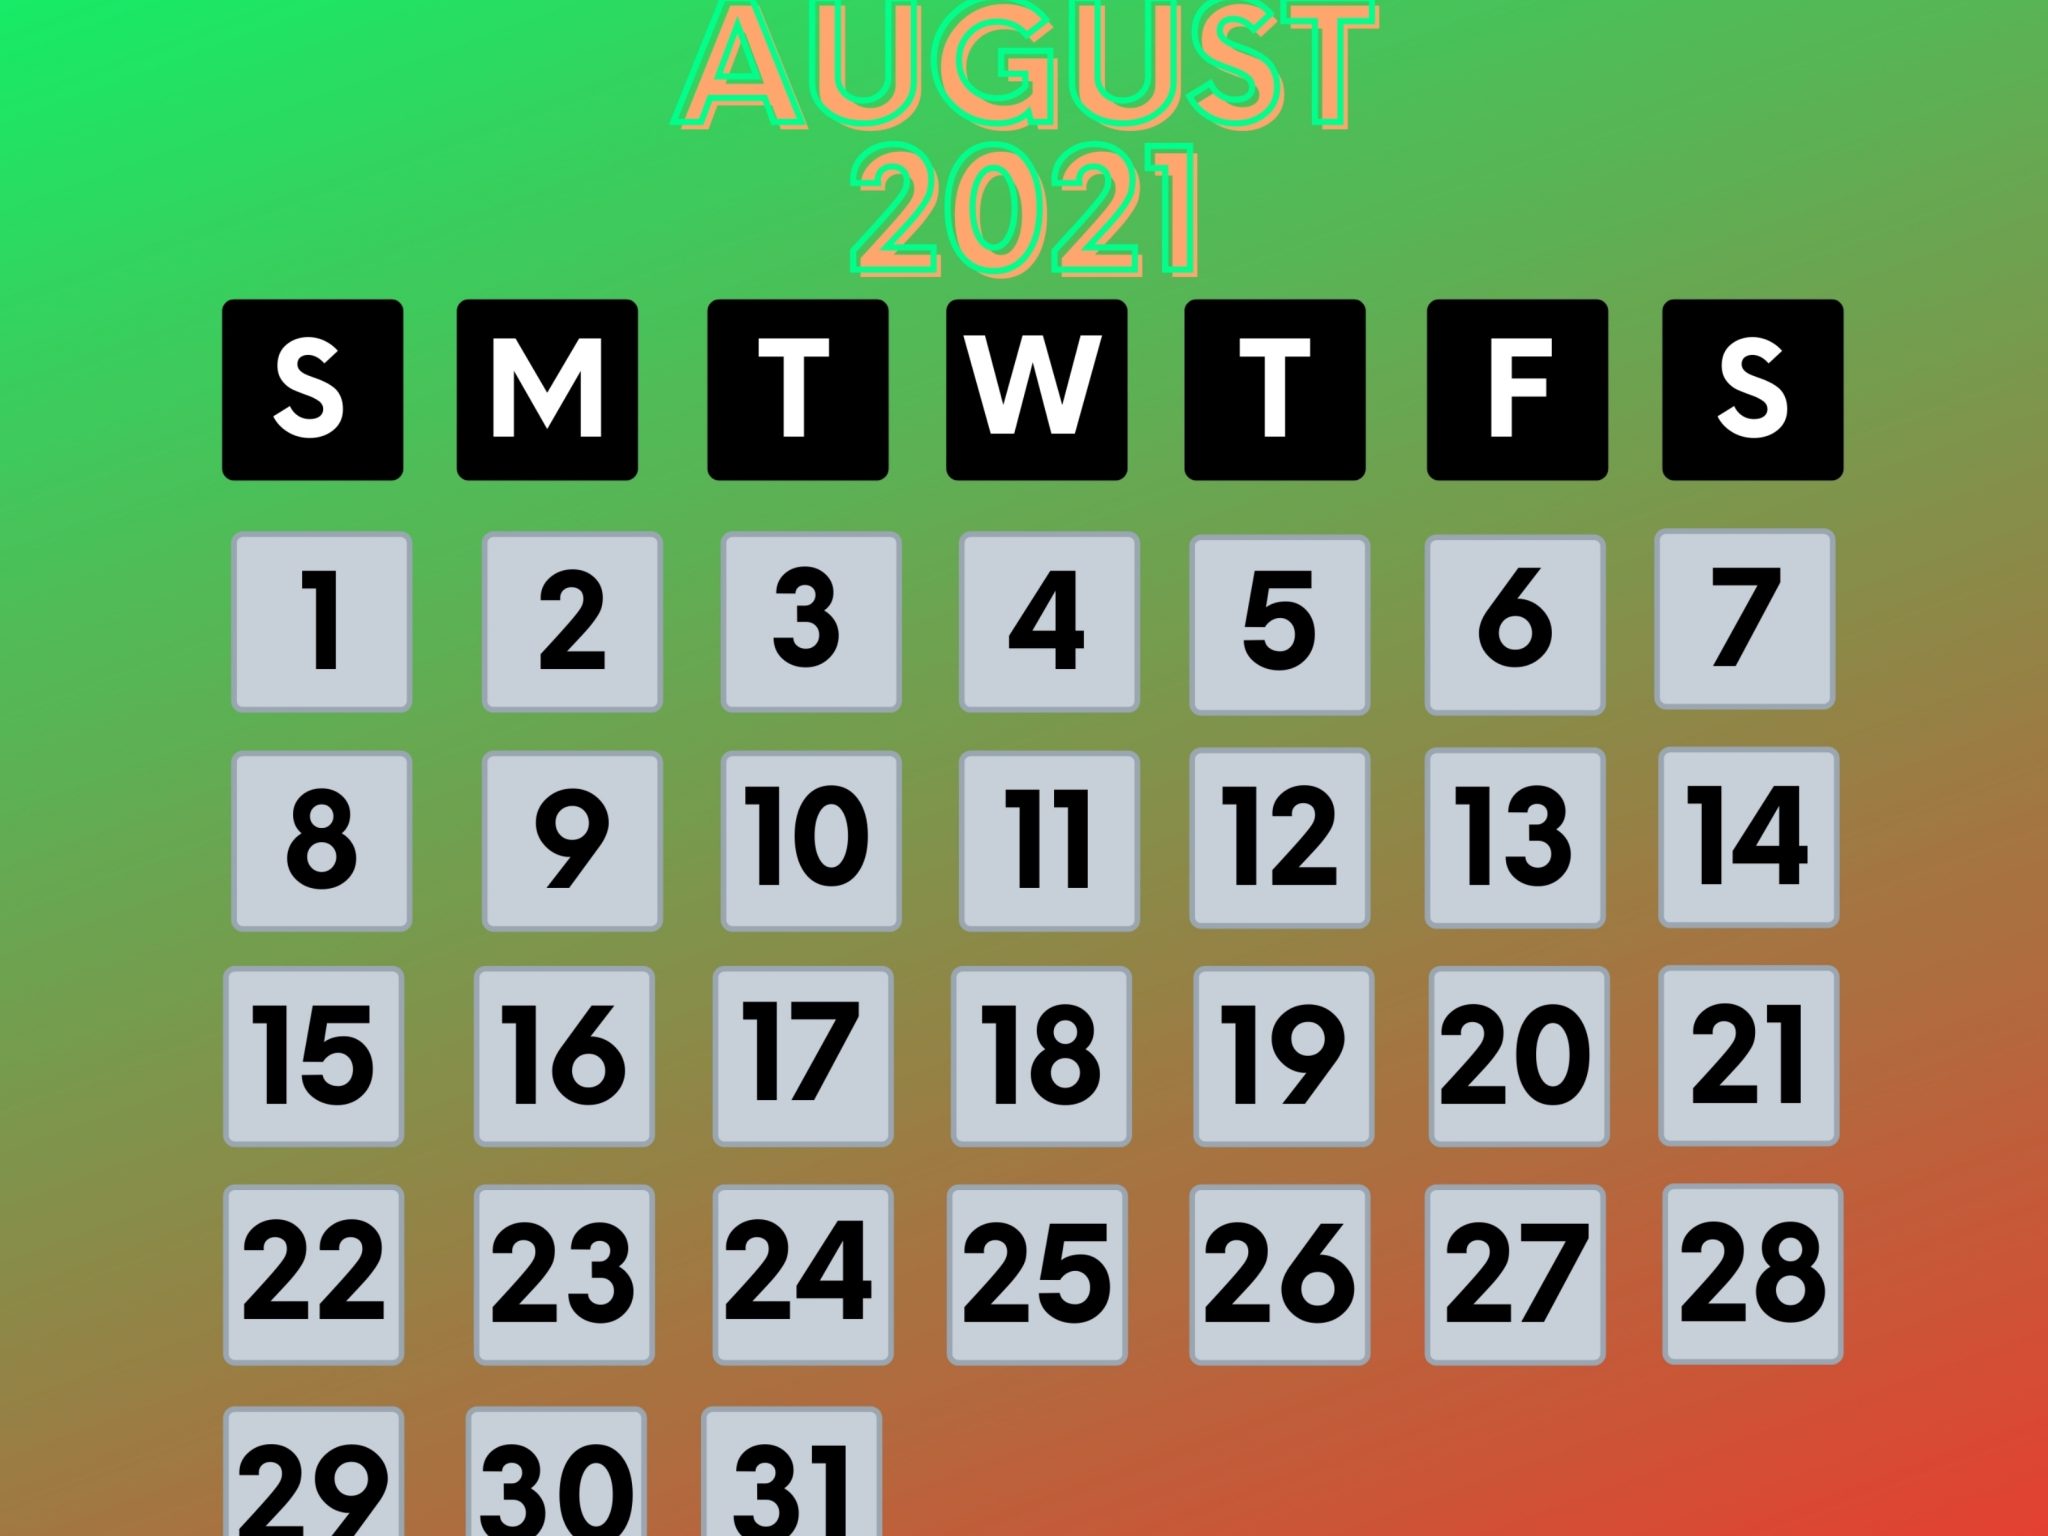 2048x1536 wallpaper August 2021 Calendar iPad Wallpaper 2048x1536 pixels resolution